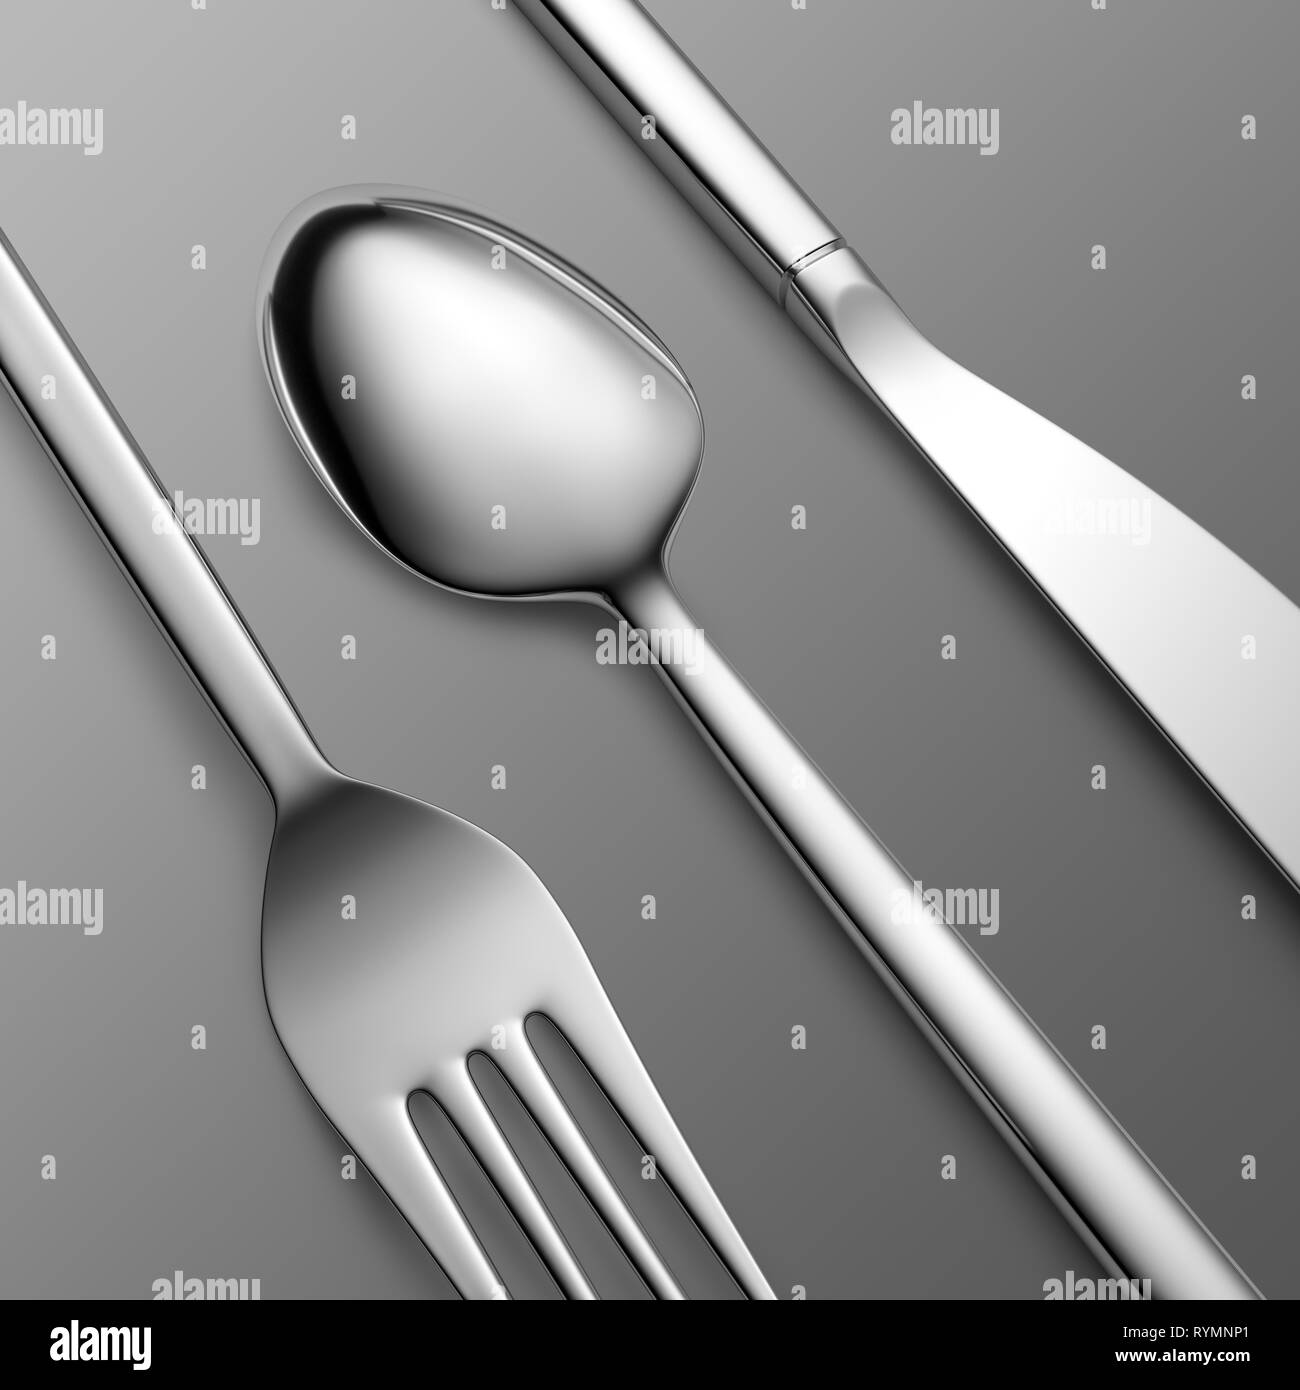 Knife. Fork. Spoon Stock Photo